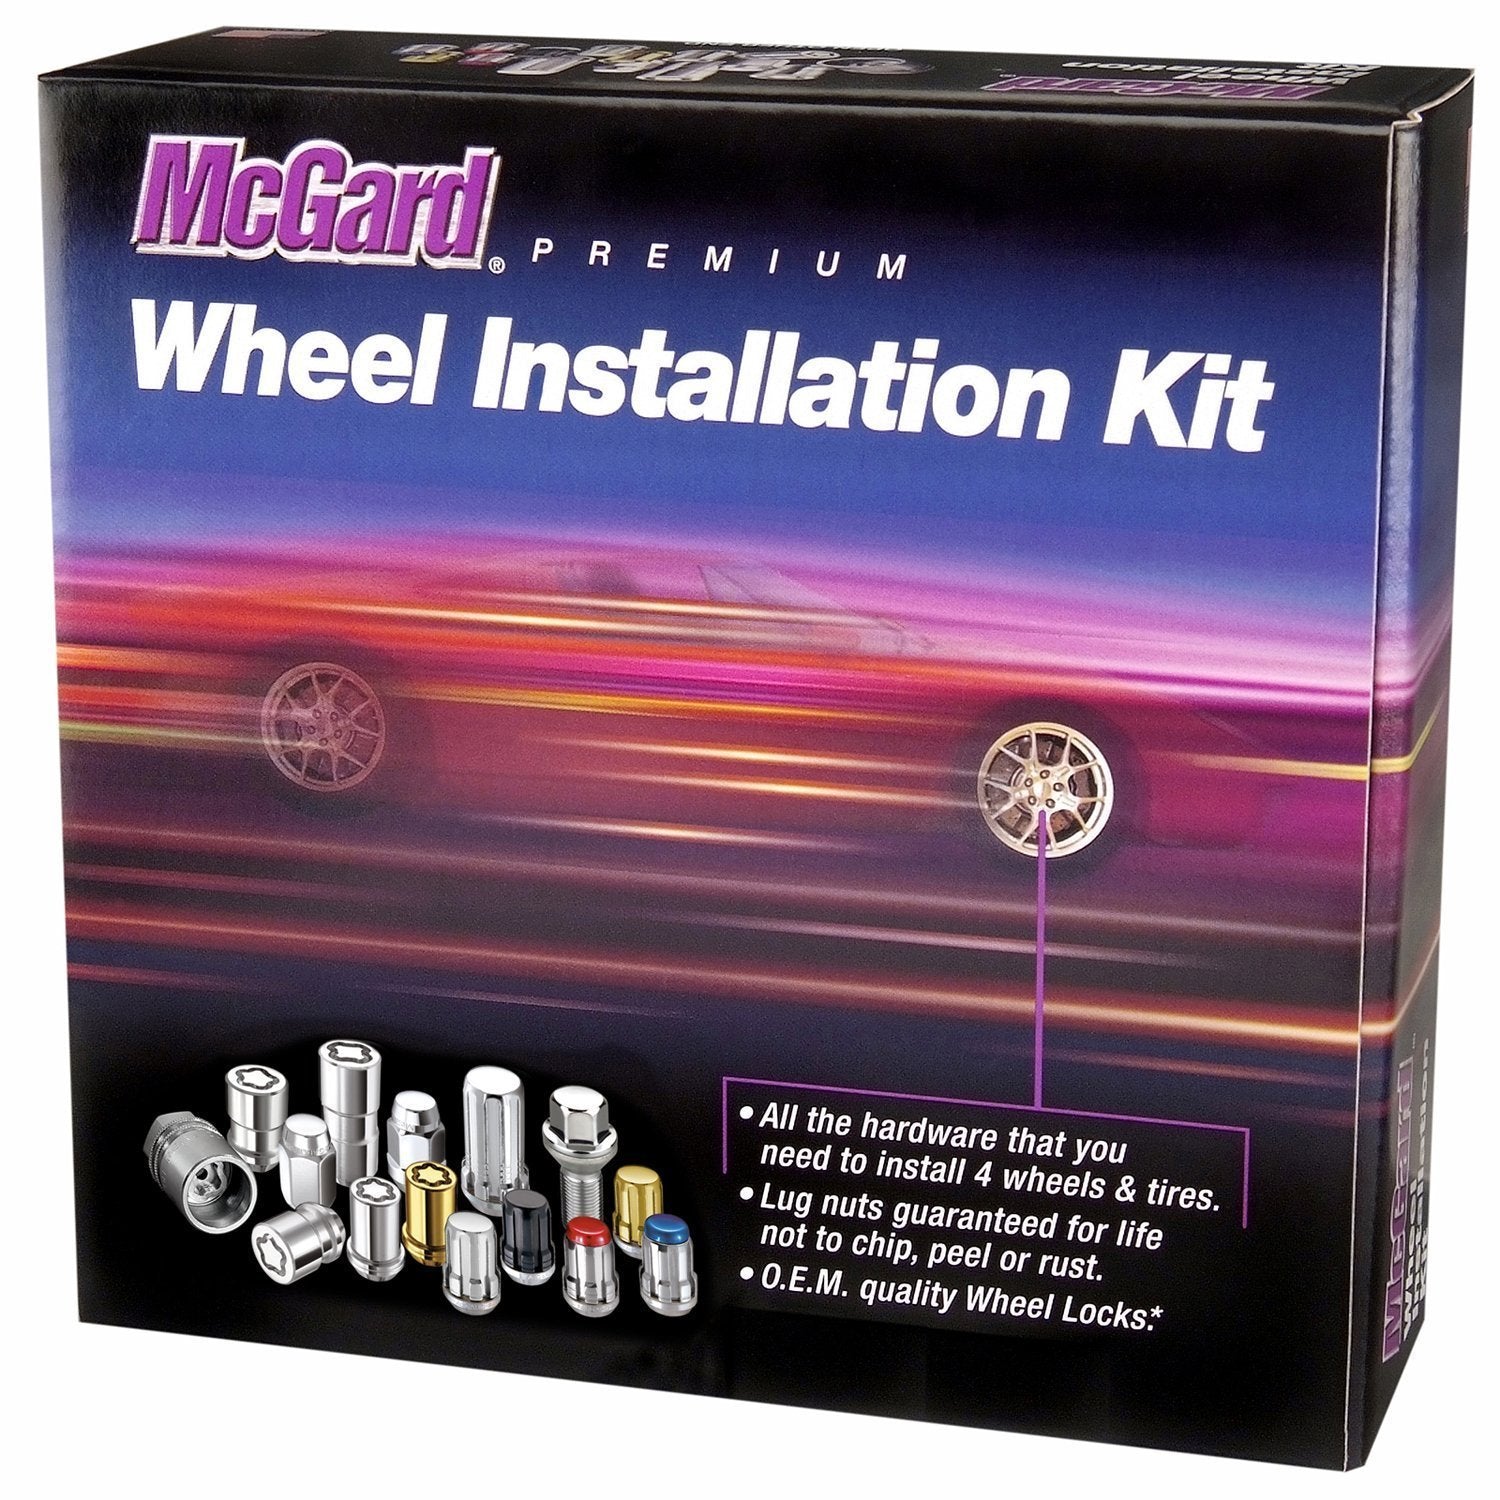 McGard, McGard Cone Seat Under Hub Cap Style Wheel Installation Kit (84518)